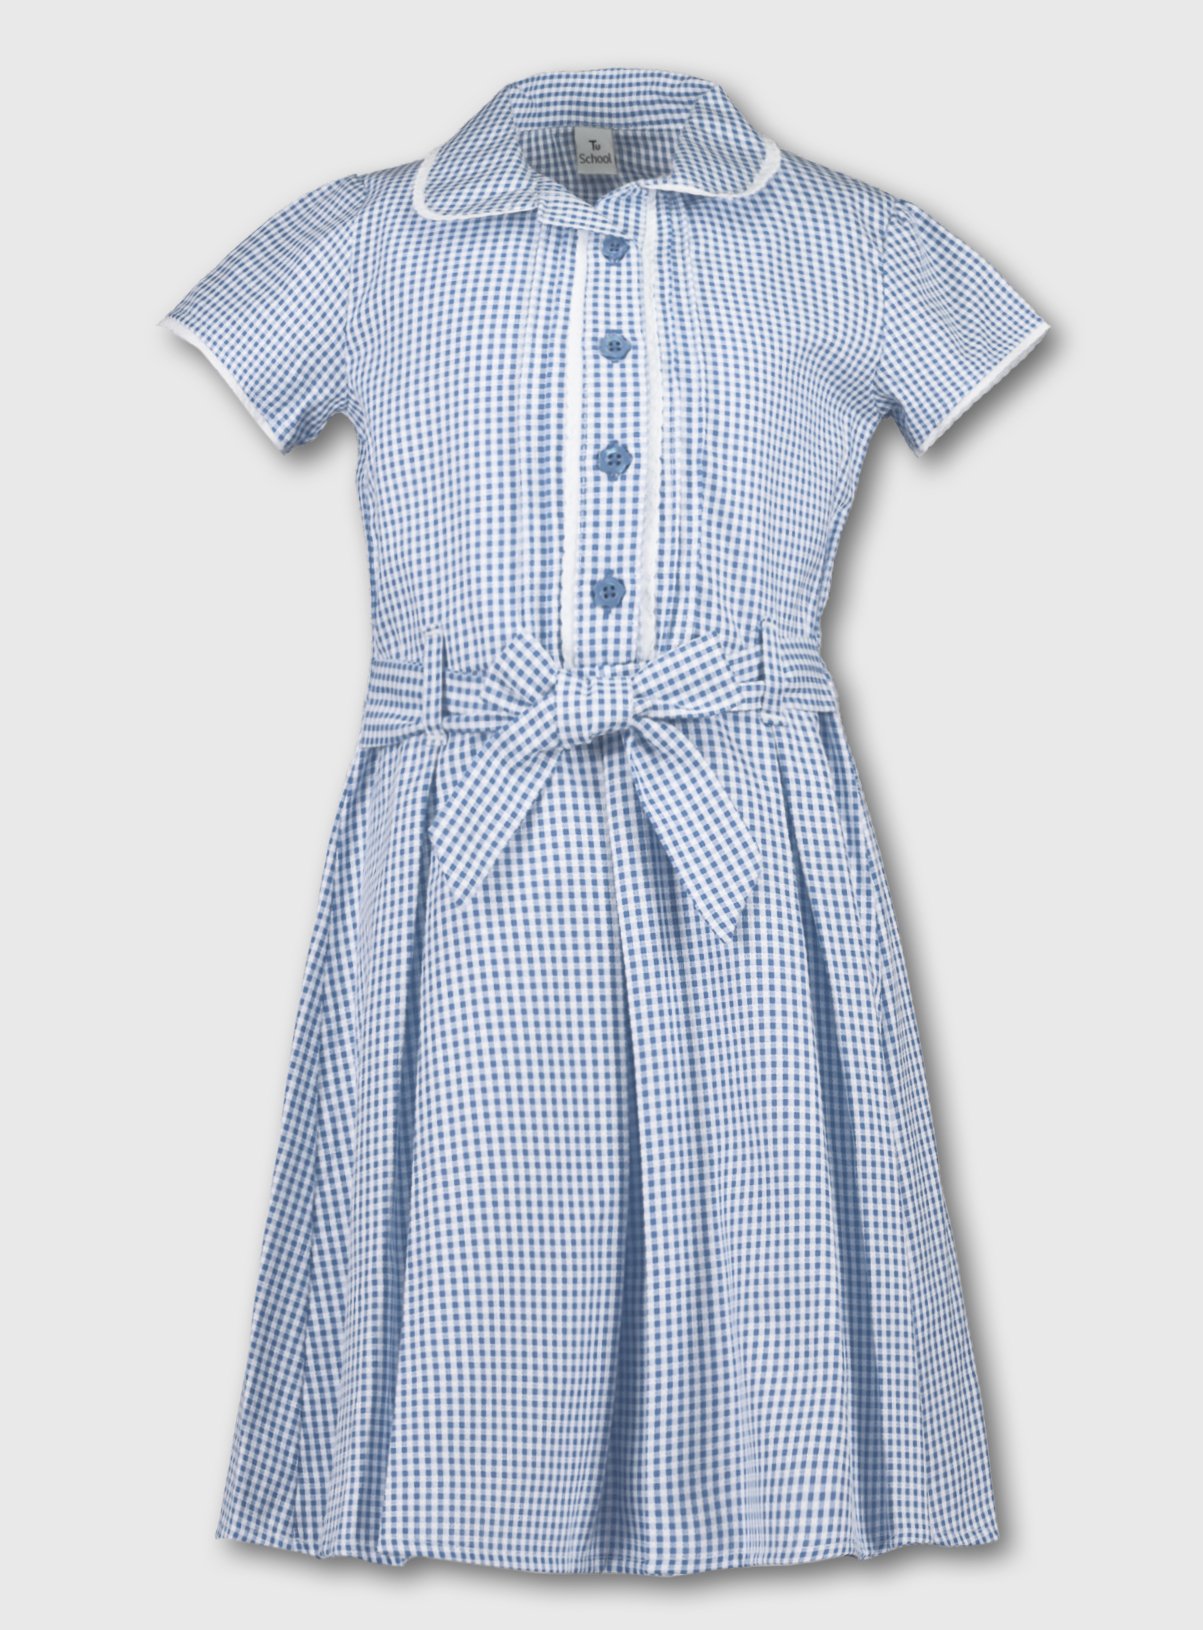 Buy Blue Classic Gingham School Dress ...